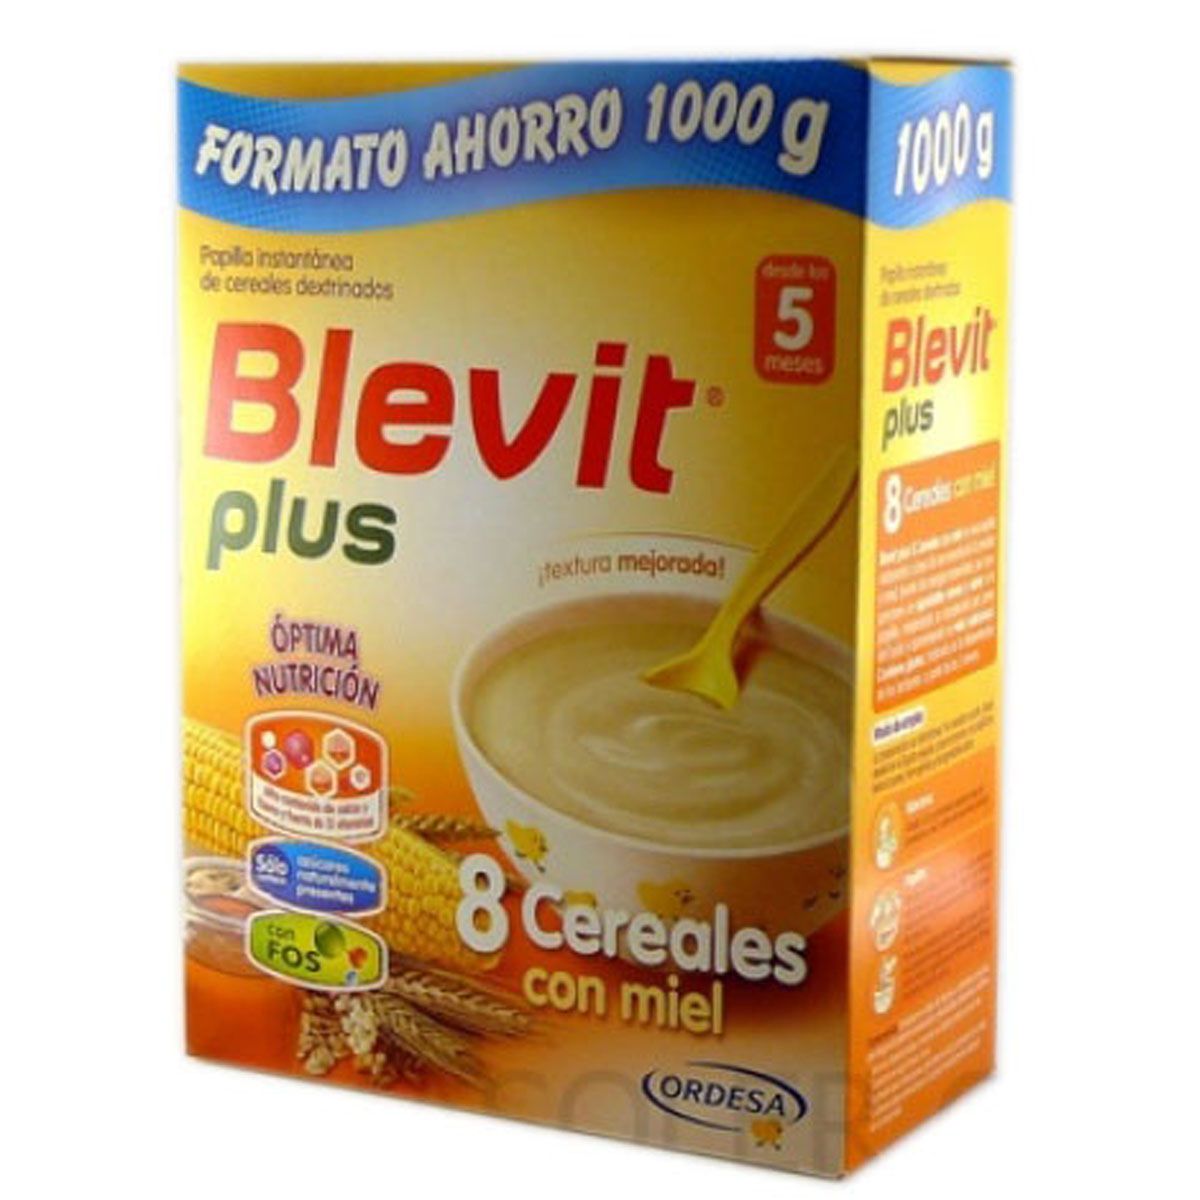 Blevit Plus 8 Cereales 1000 G - Comprar ahora.